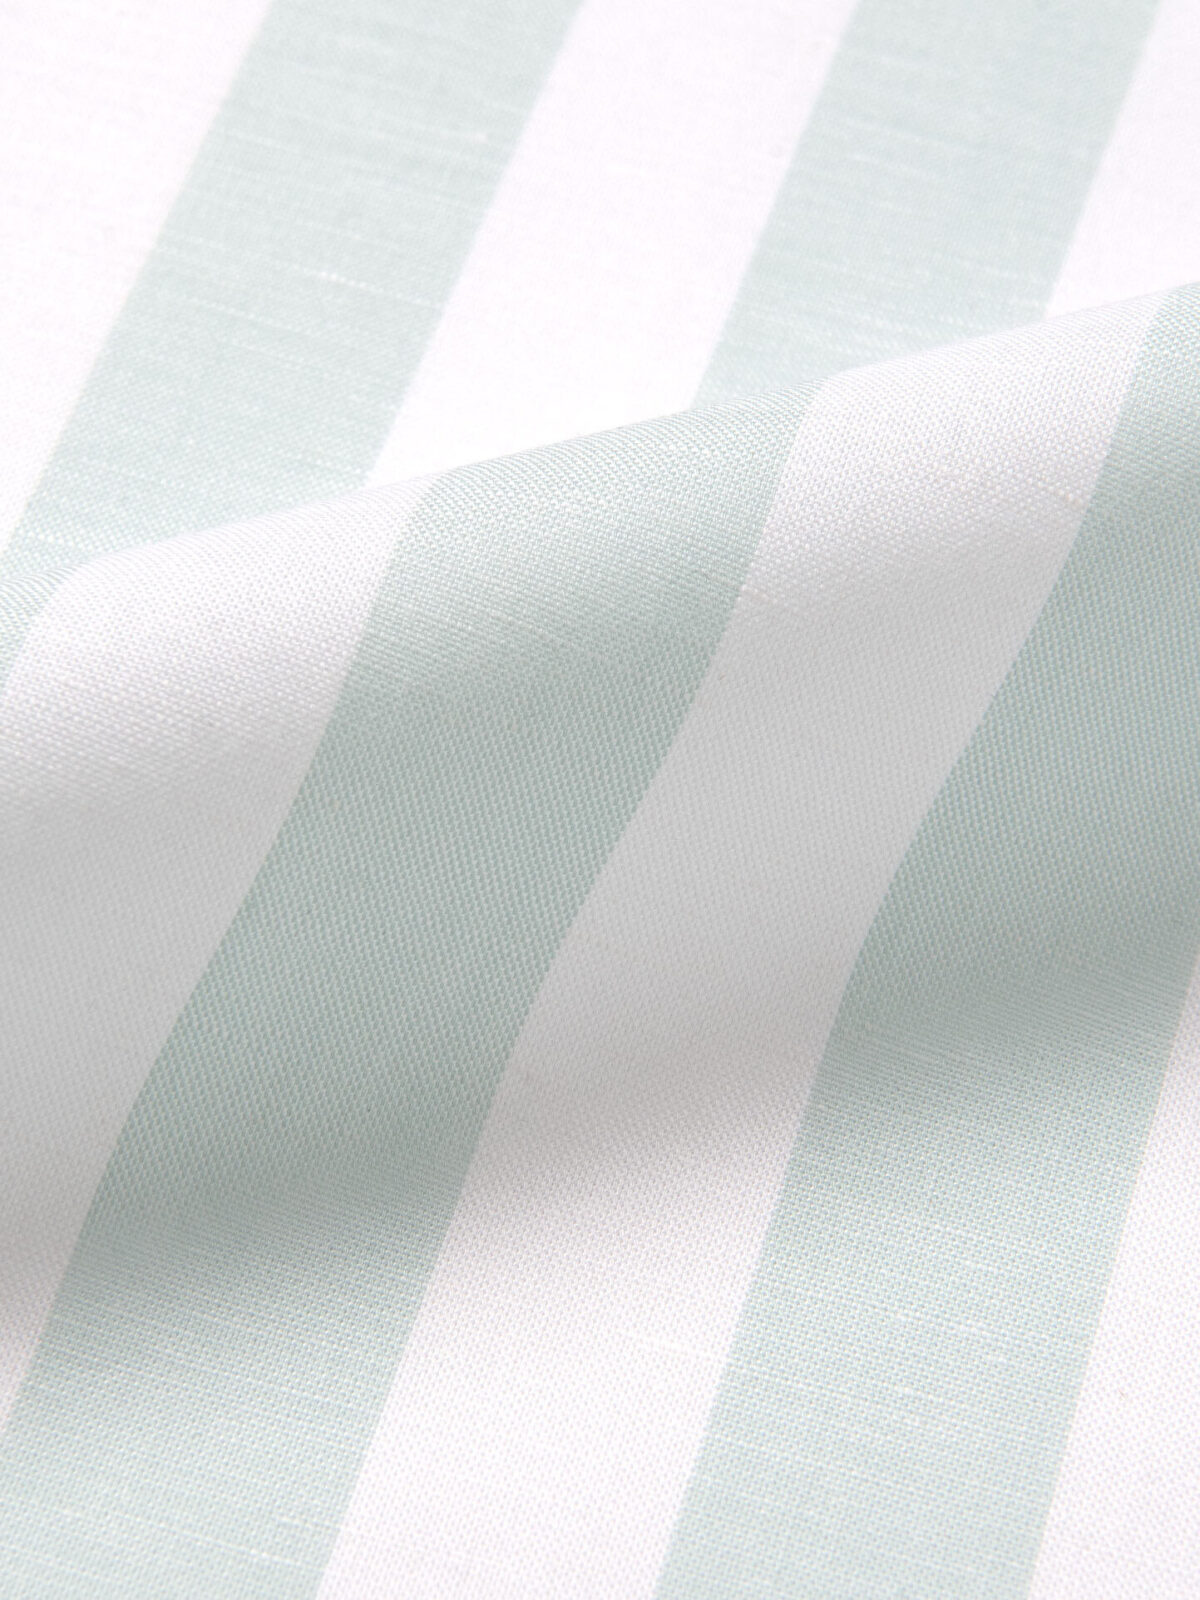 Portuguese Mint Extra Wide Stripe Cotton Linen Oxford Shirt by